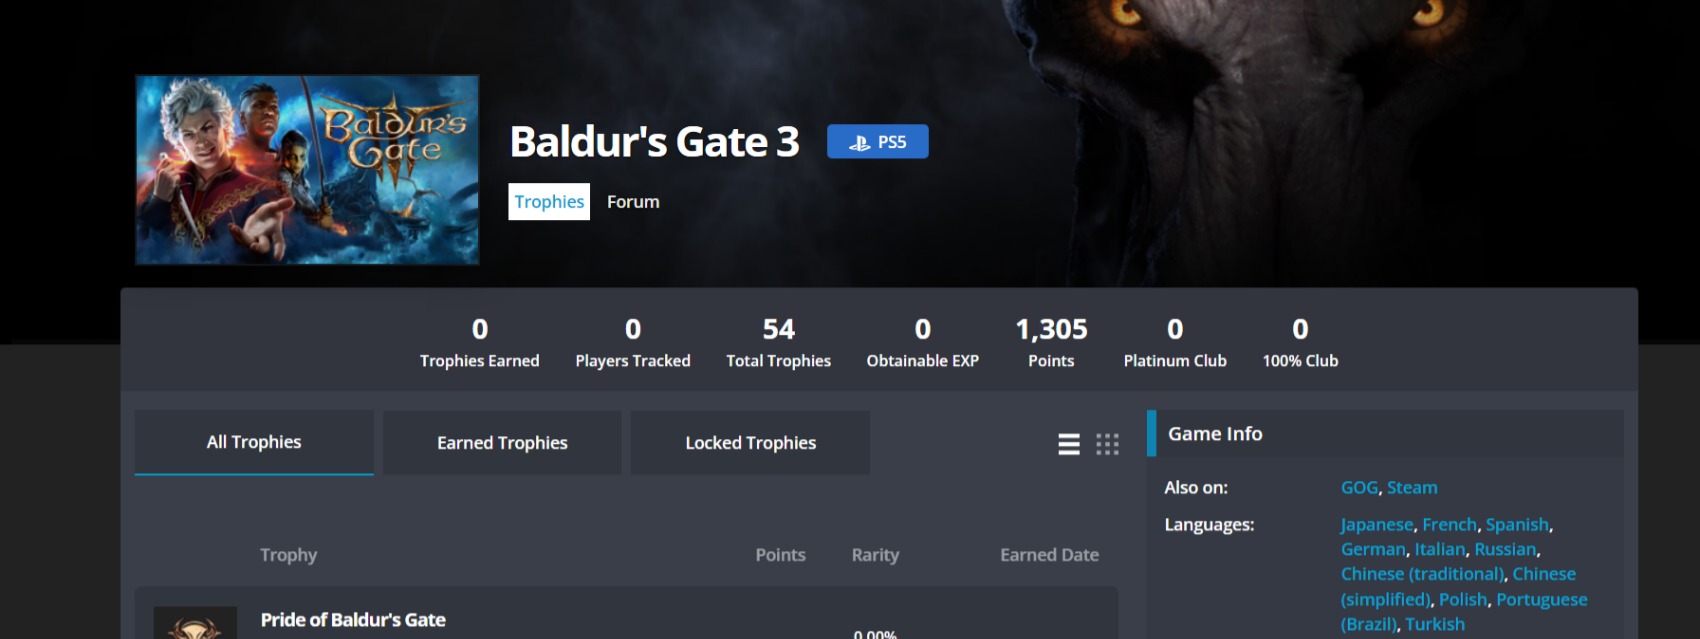 Baldur's Gate 3 PS5 trophy list has leaked.